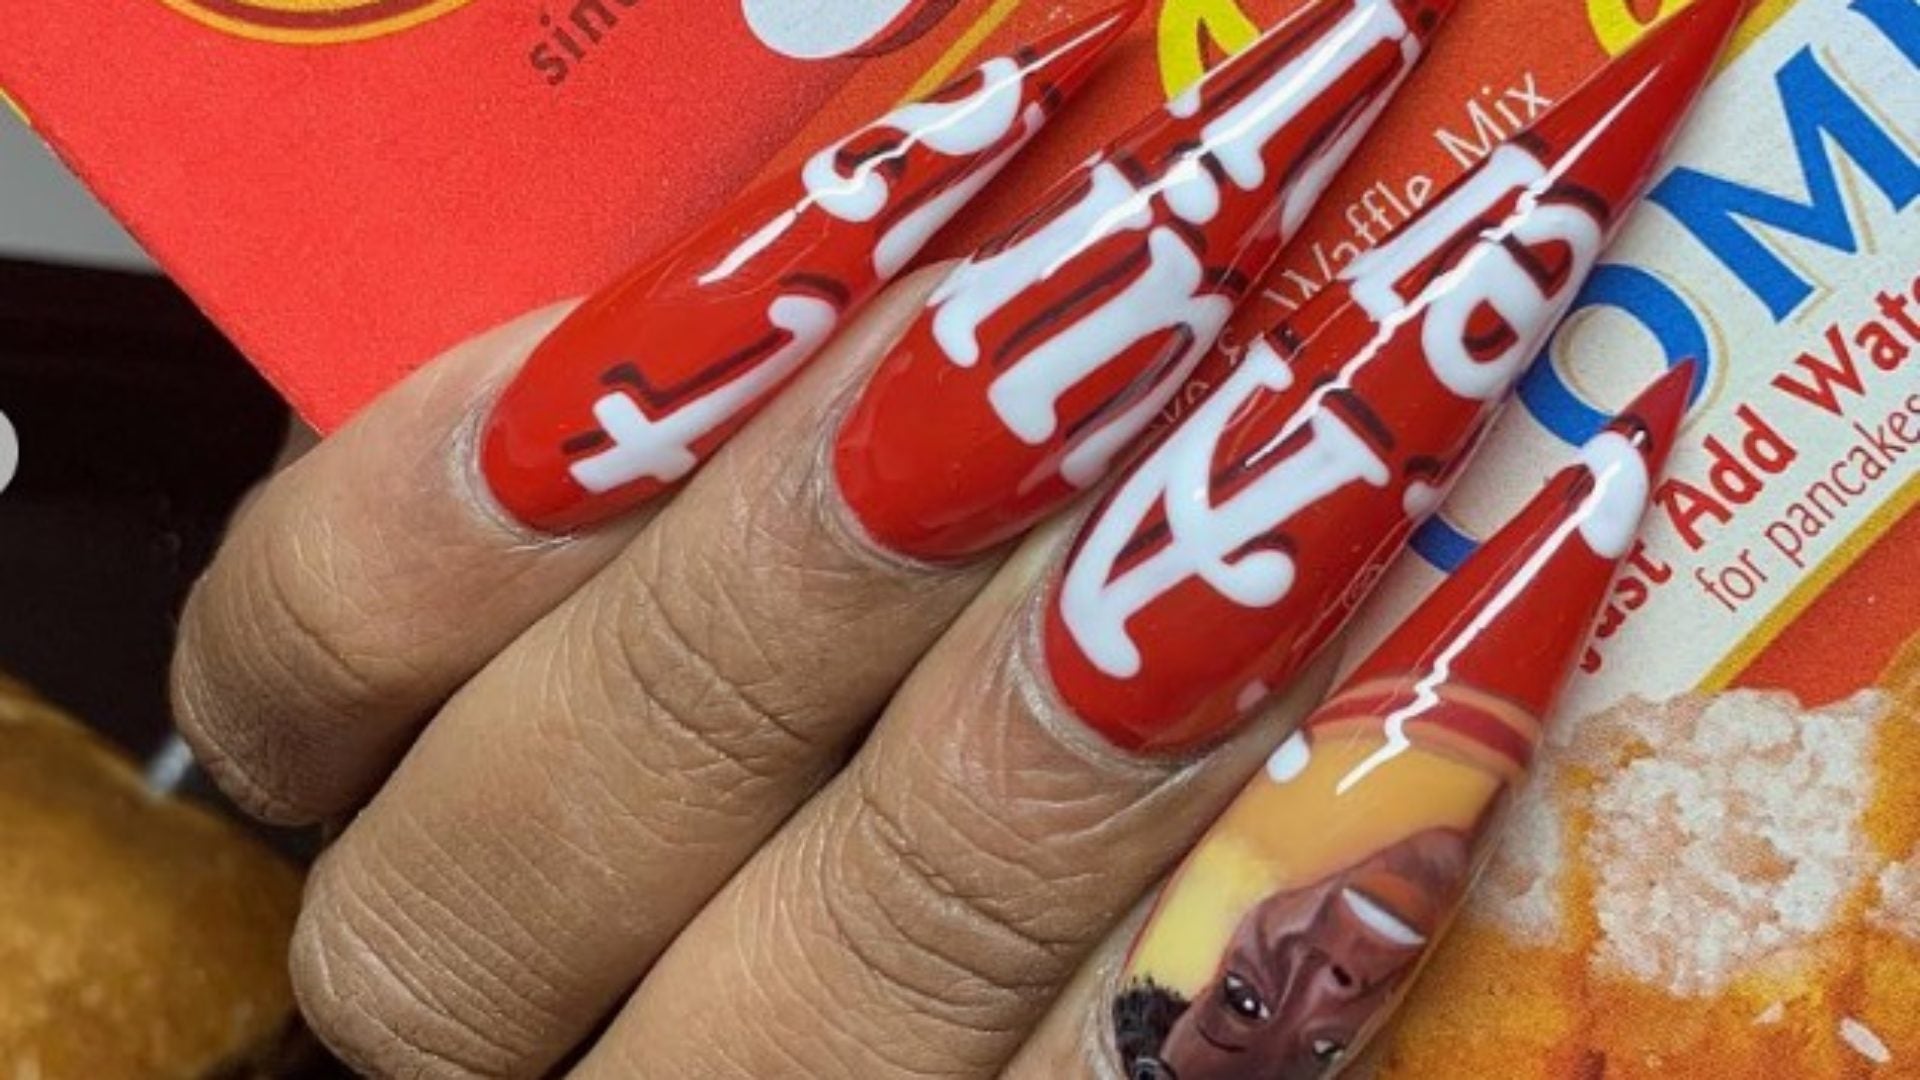 11 Of The Tastiest Looking Nails On Instagram